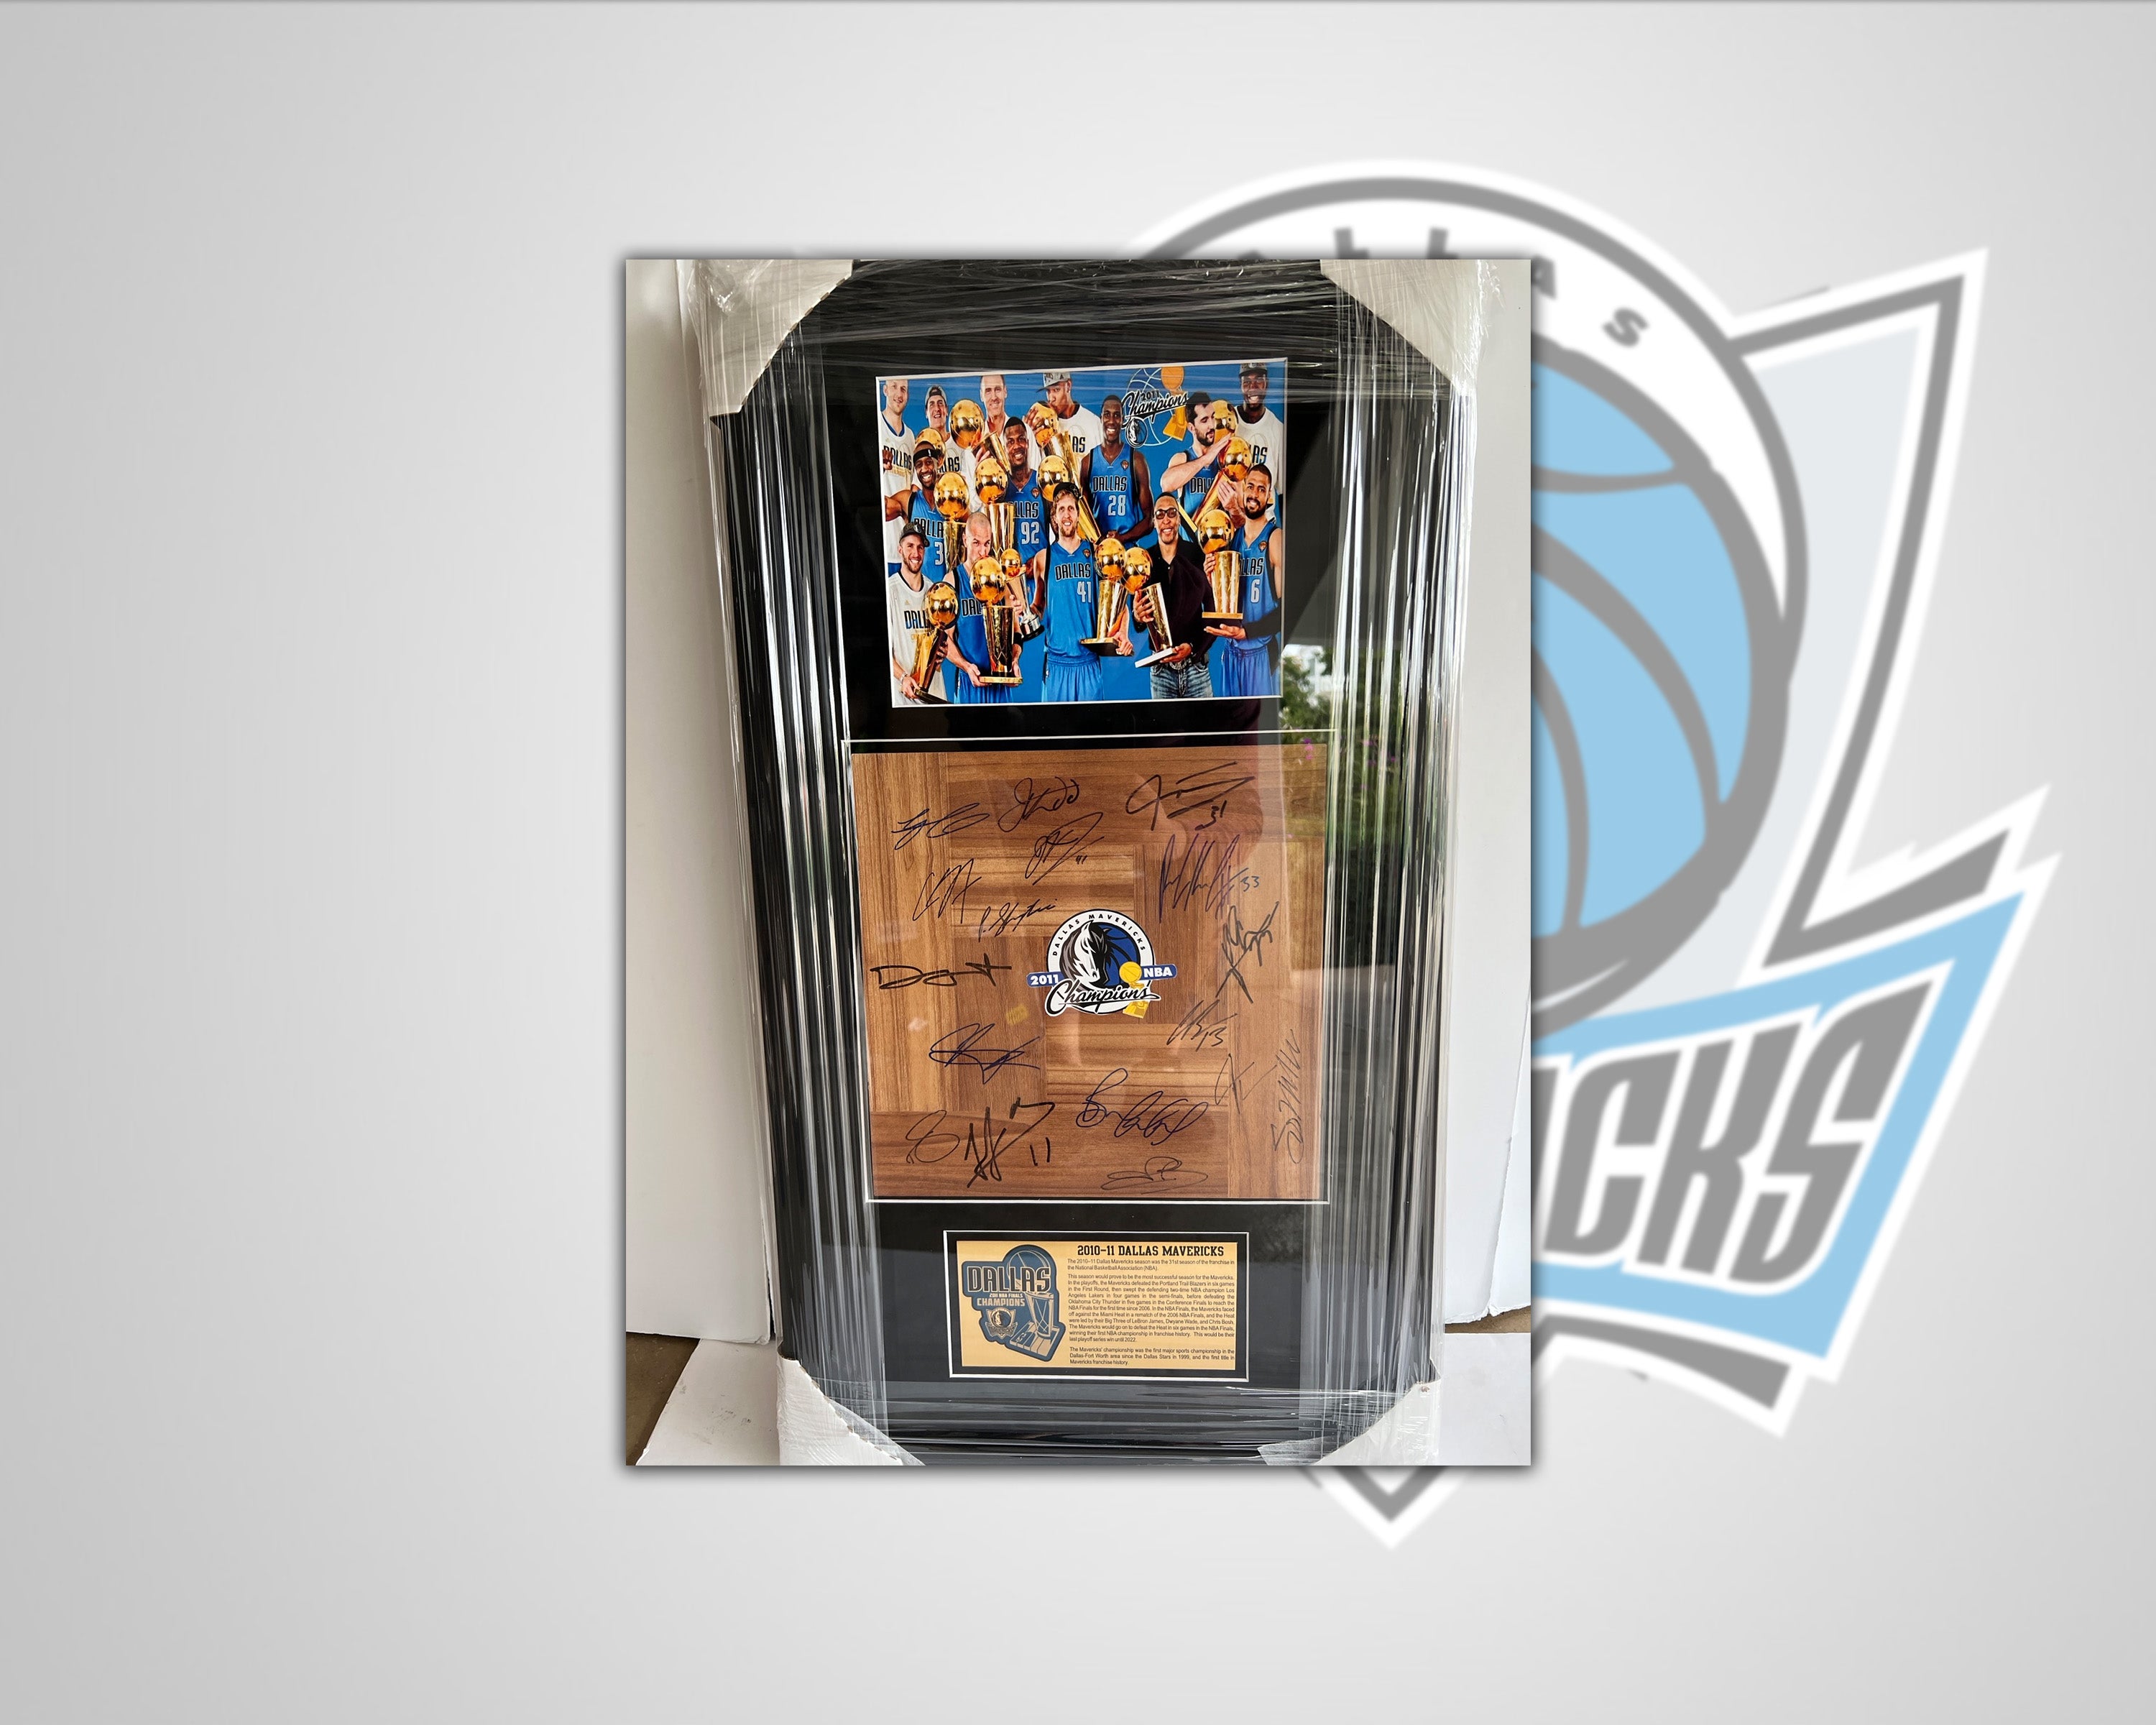 Dallas Mavericks Dirk Nowitzki, Jason Kidd 2010-11 NBA champions Team parquet floor board signed & framed 32x18in with proof